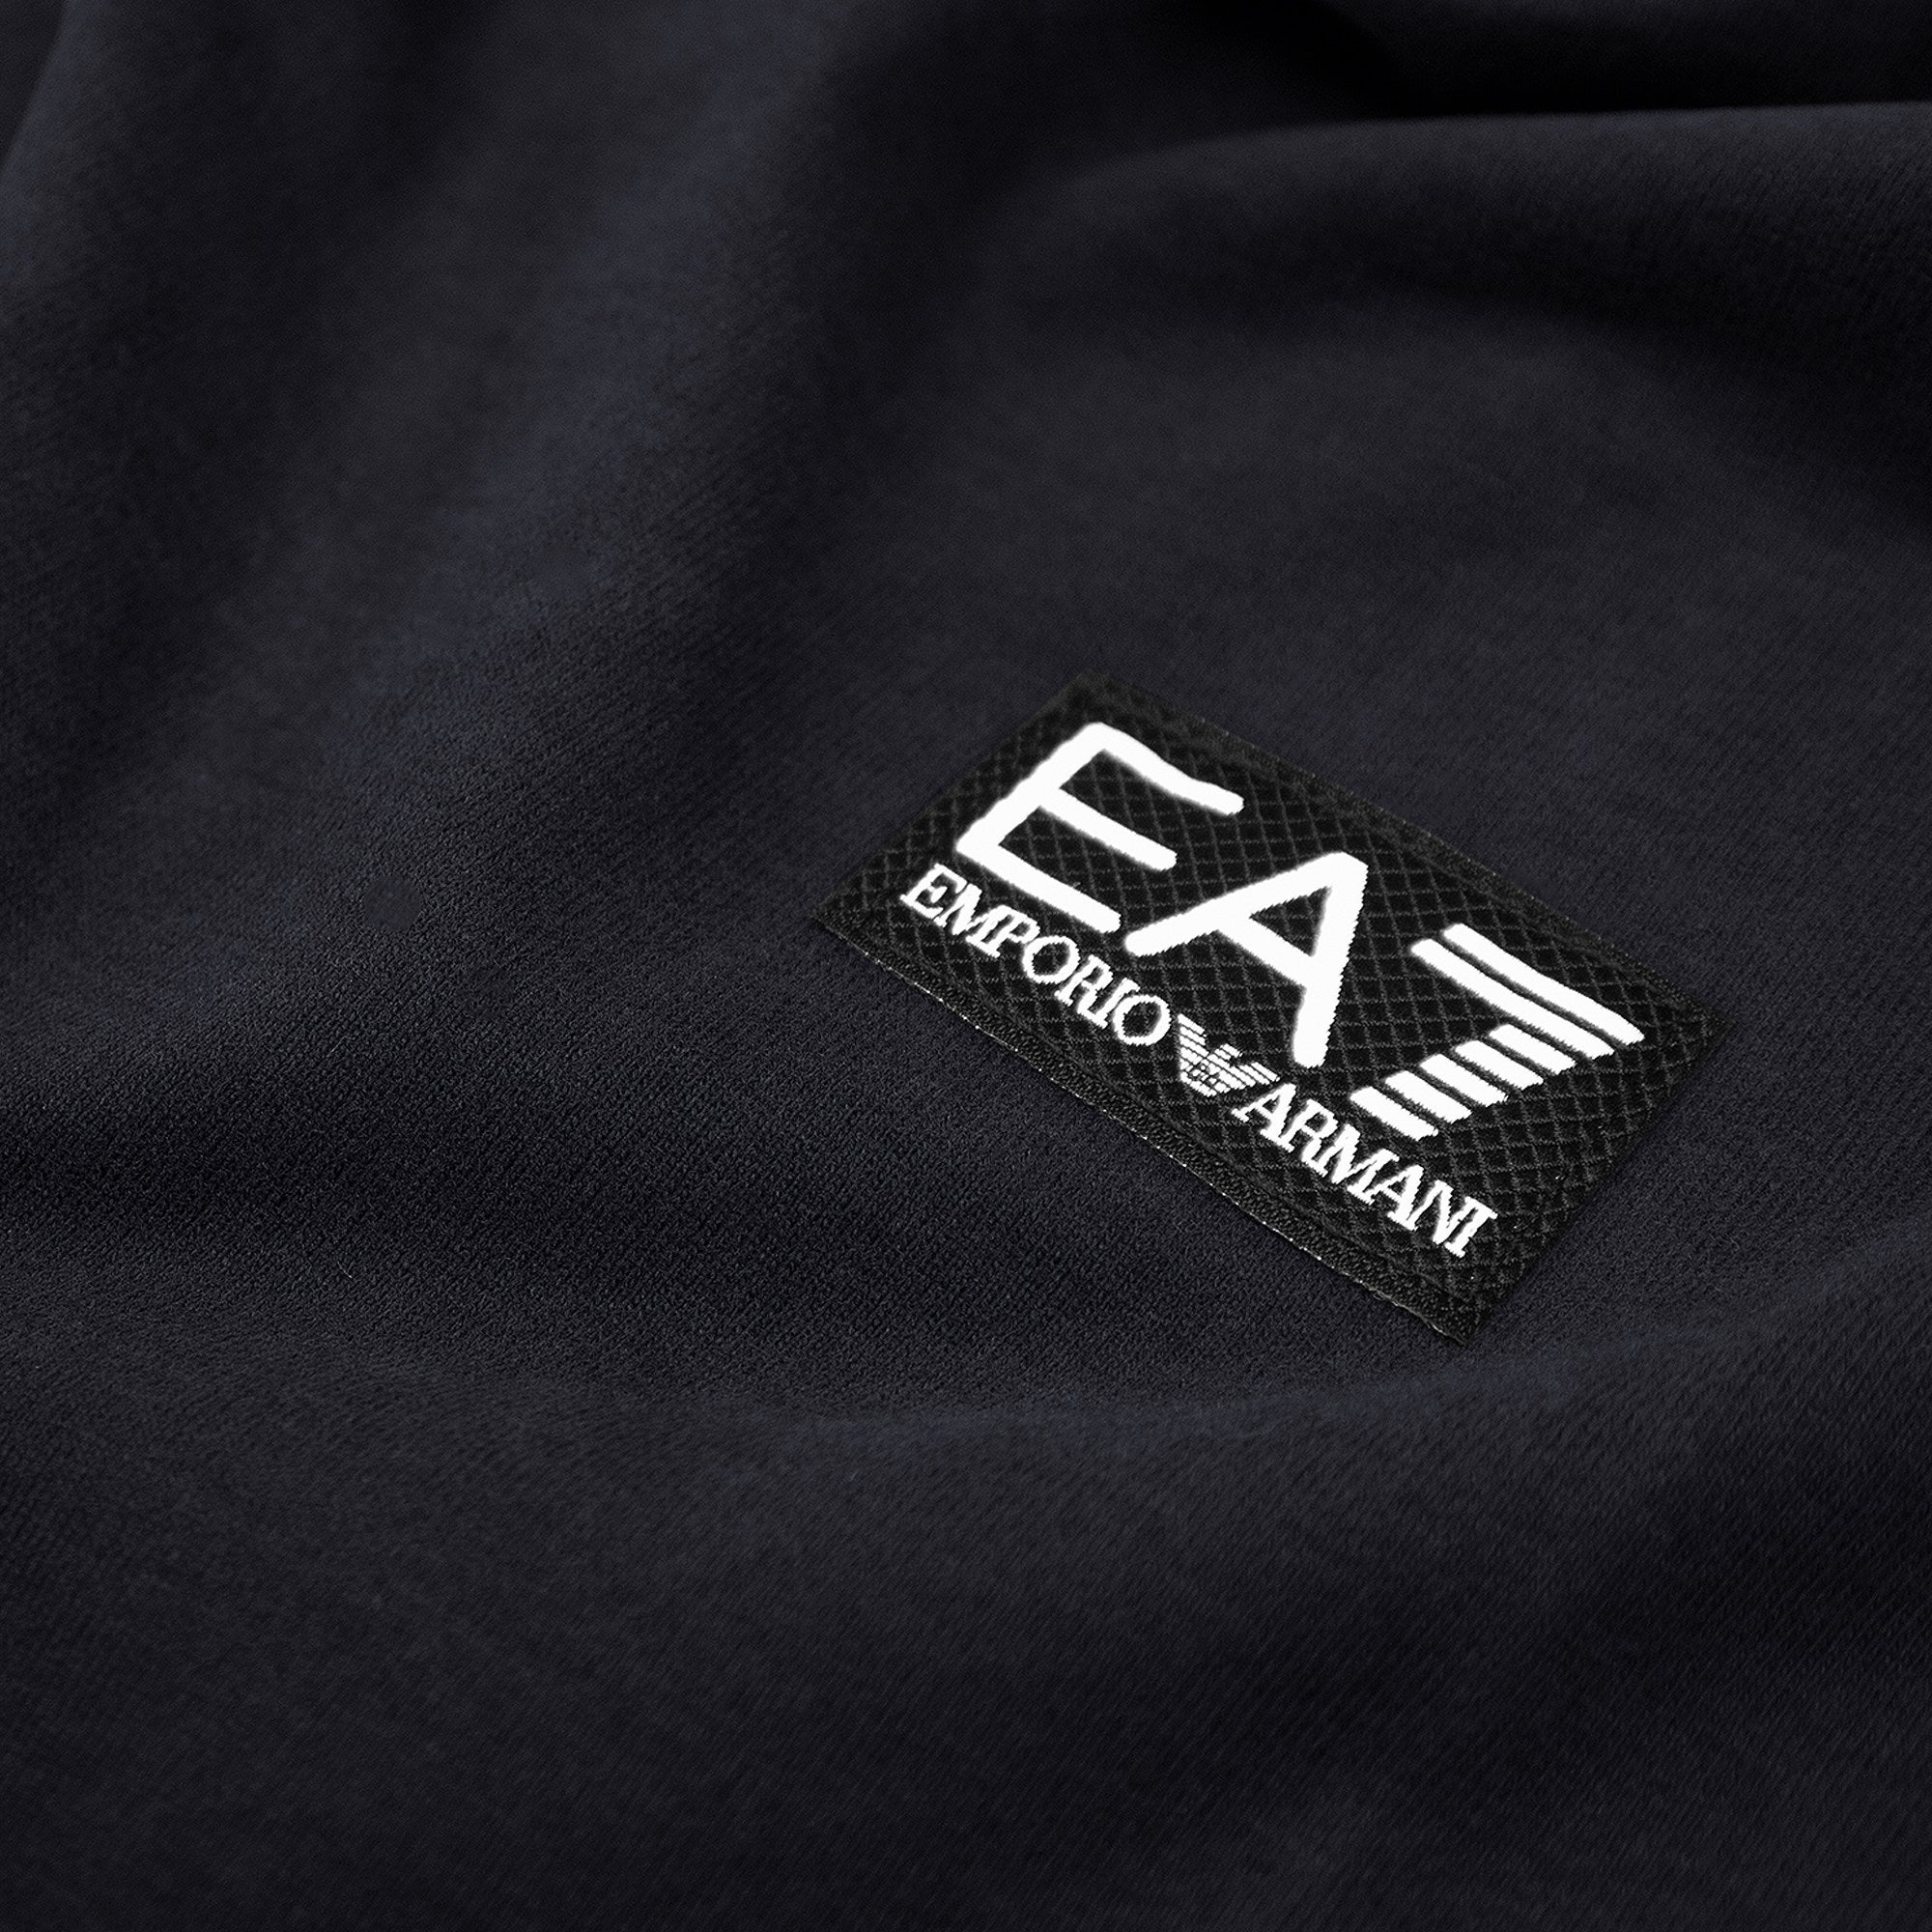 Emporio Armani EA7 New Badge T-Shirt - Navy